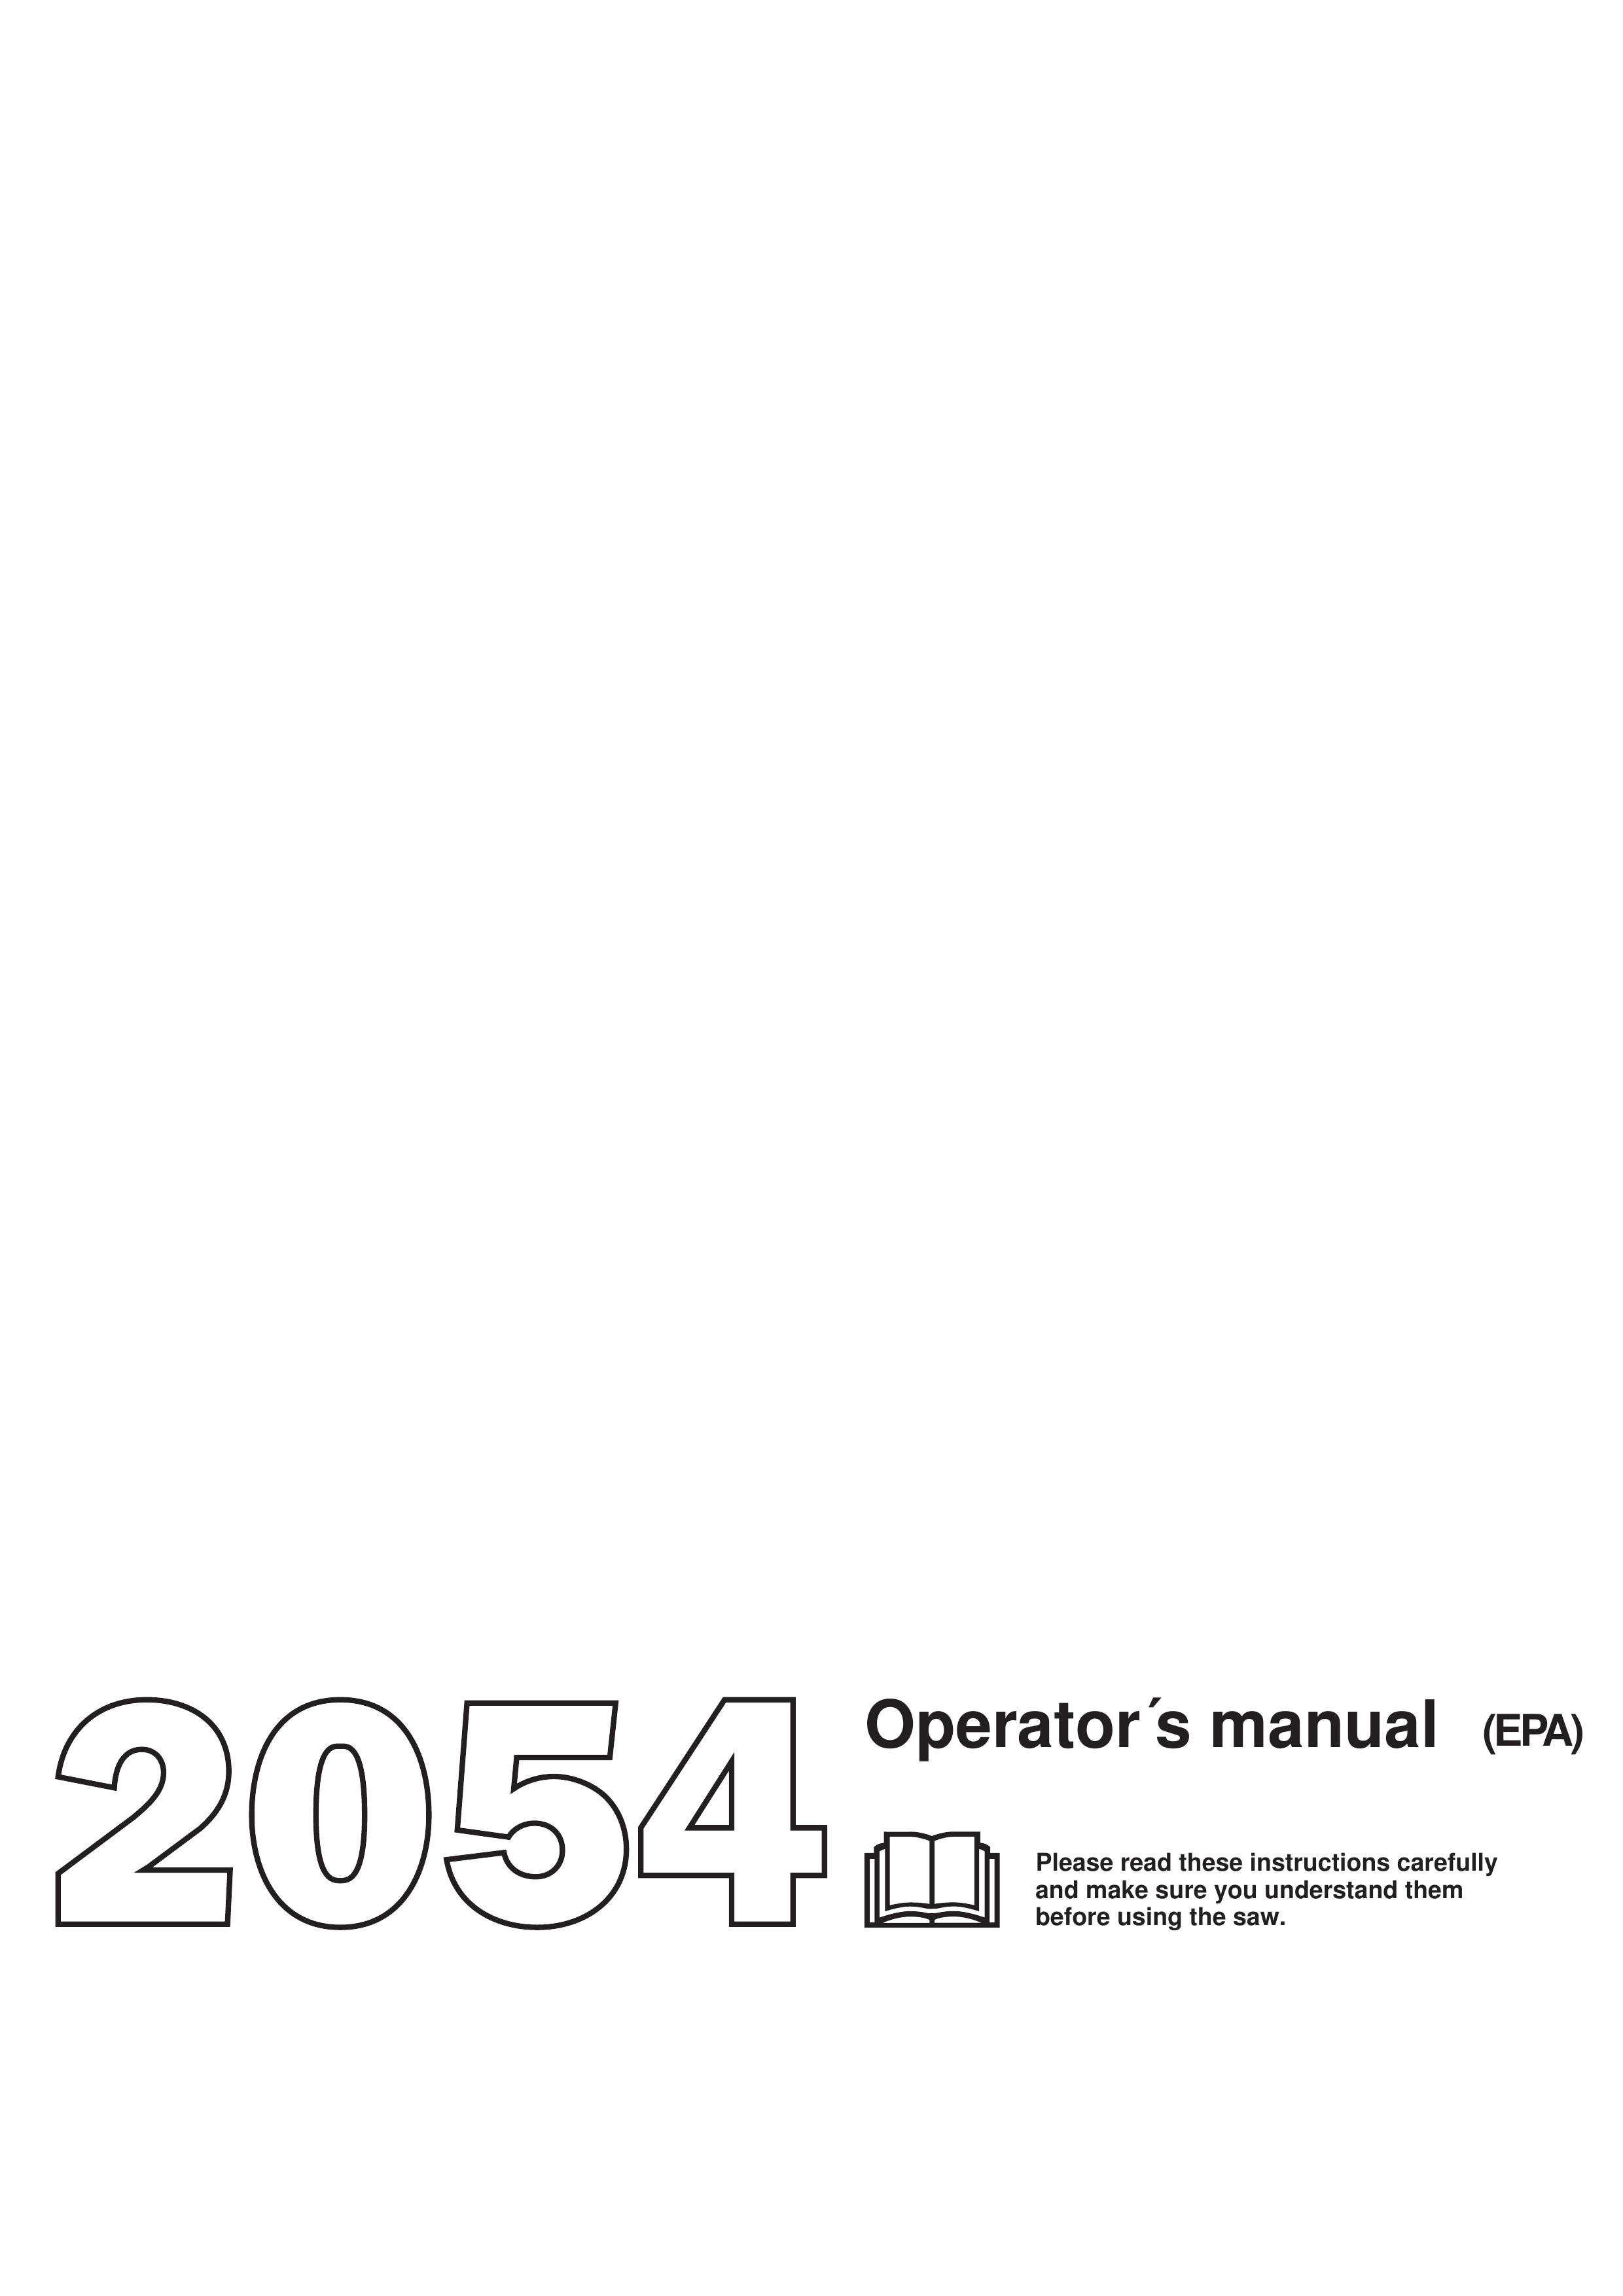 Jonsered 2054 Chainsaw User Manual